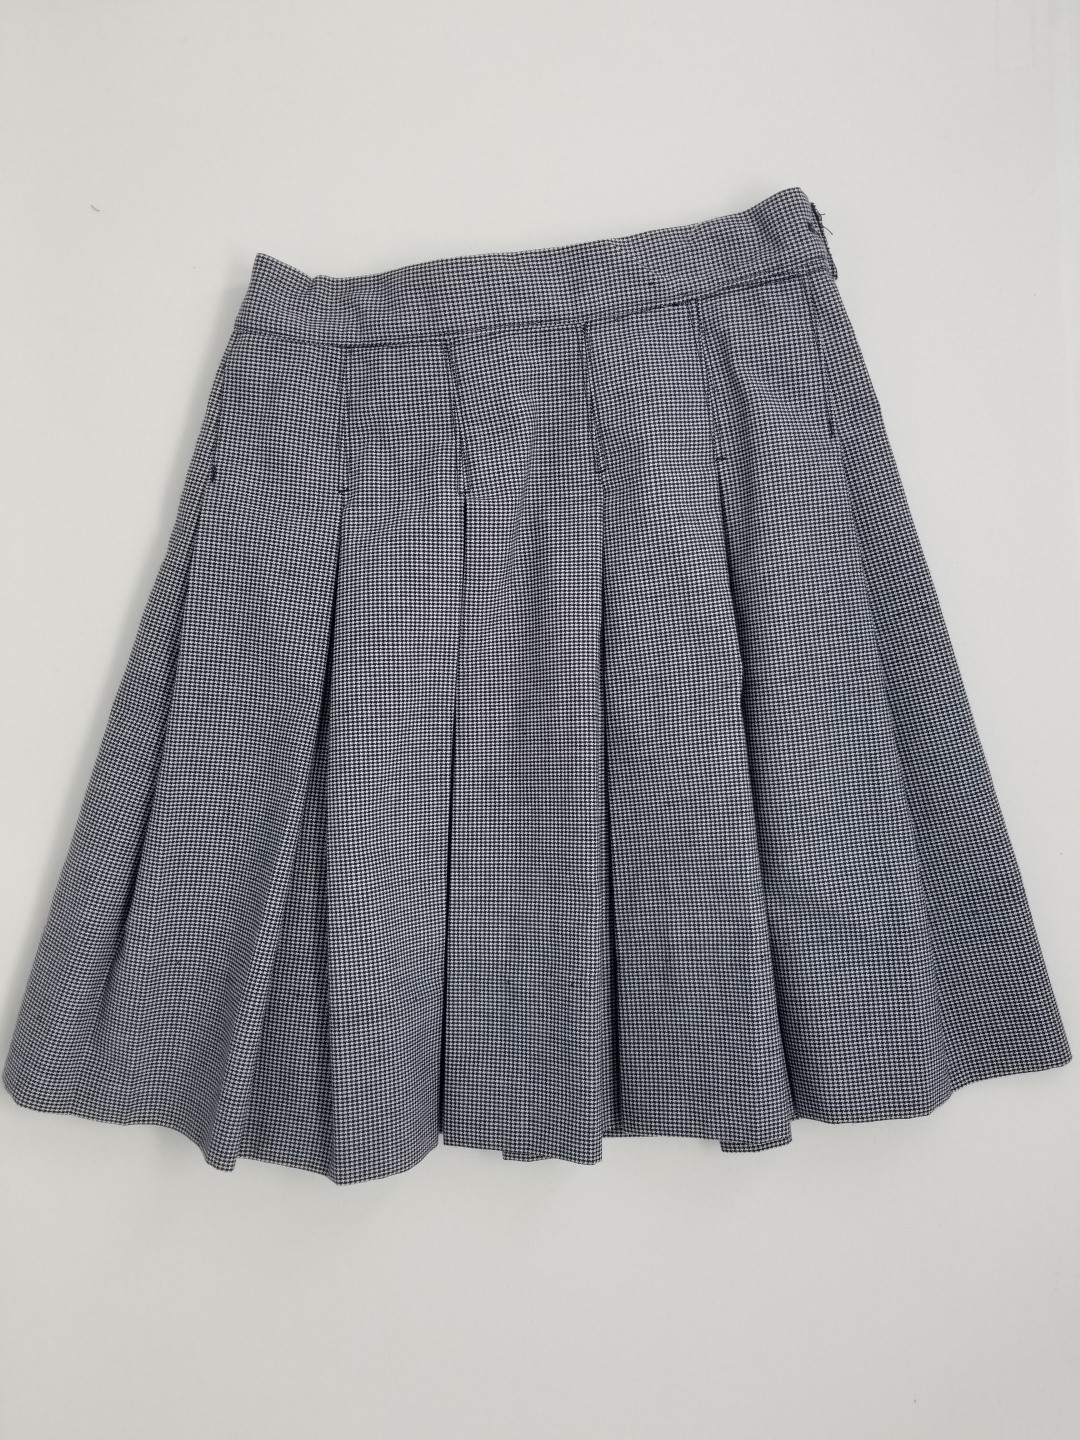 Stitch Down Pleat Skirt- Style 11-Plaid 39